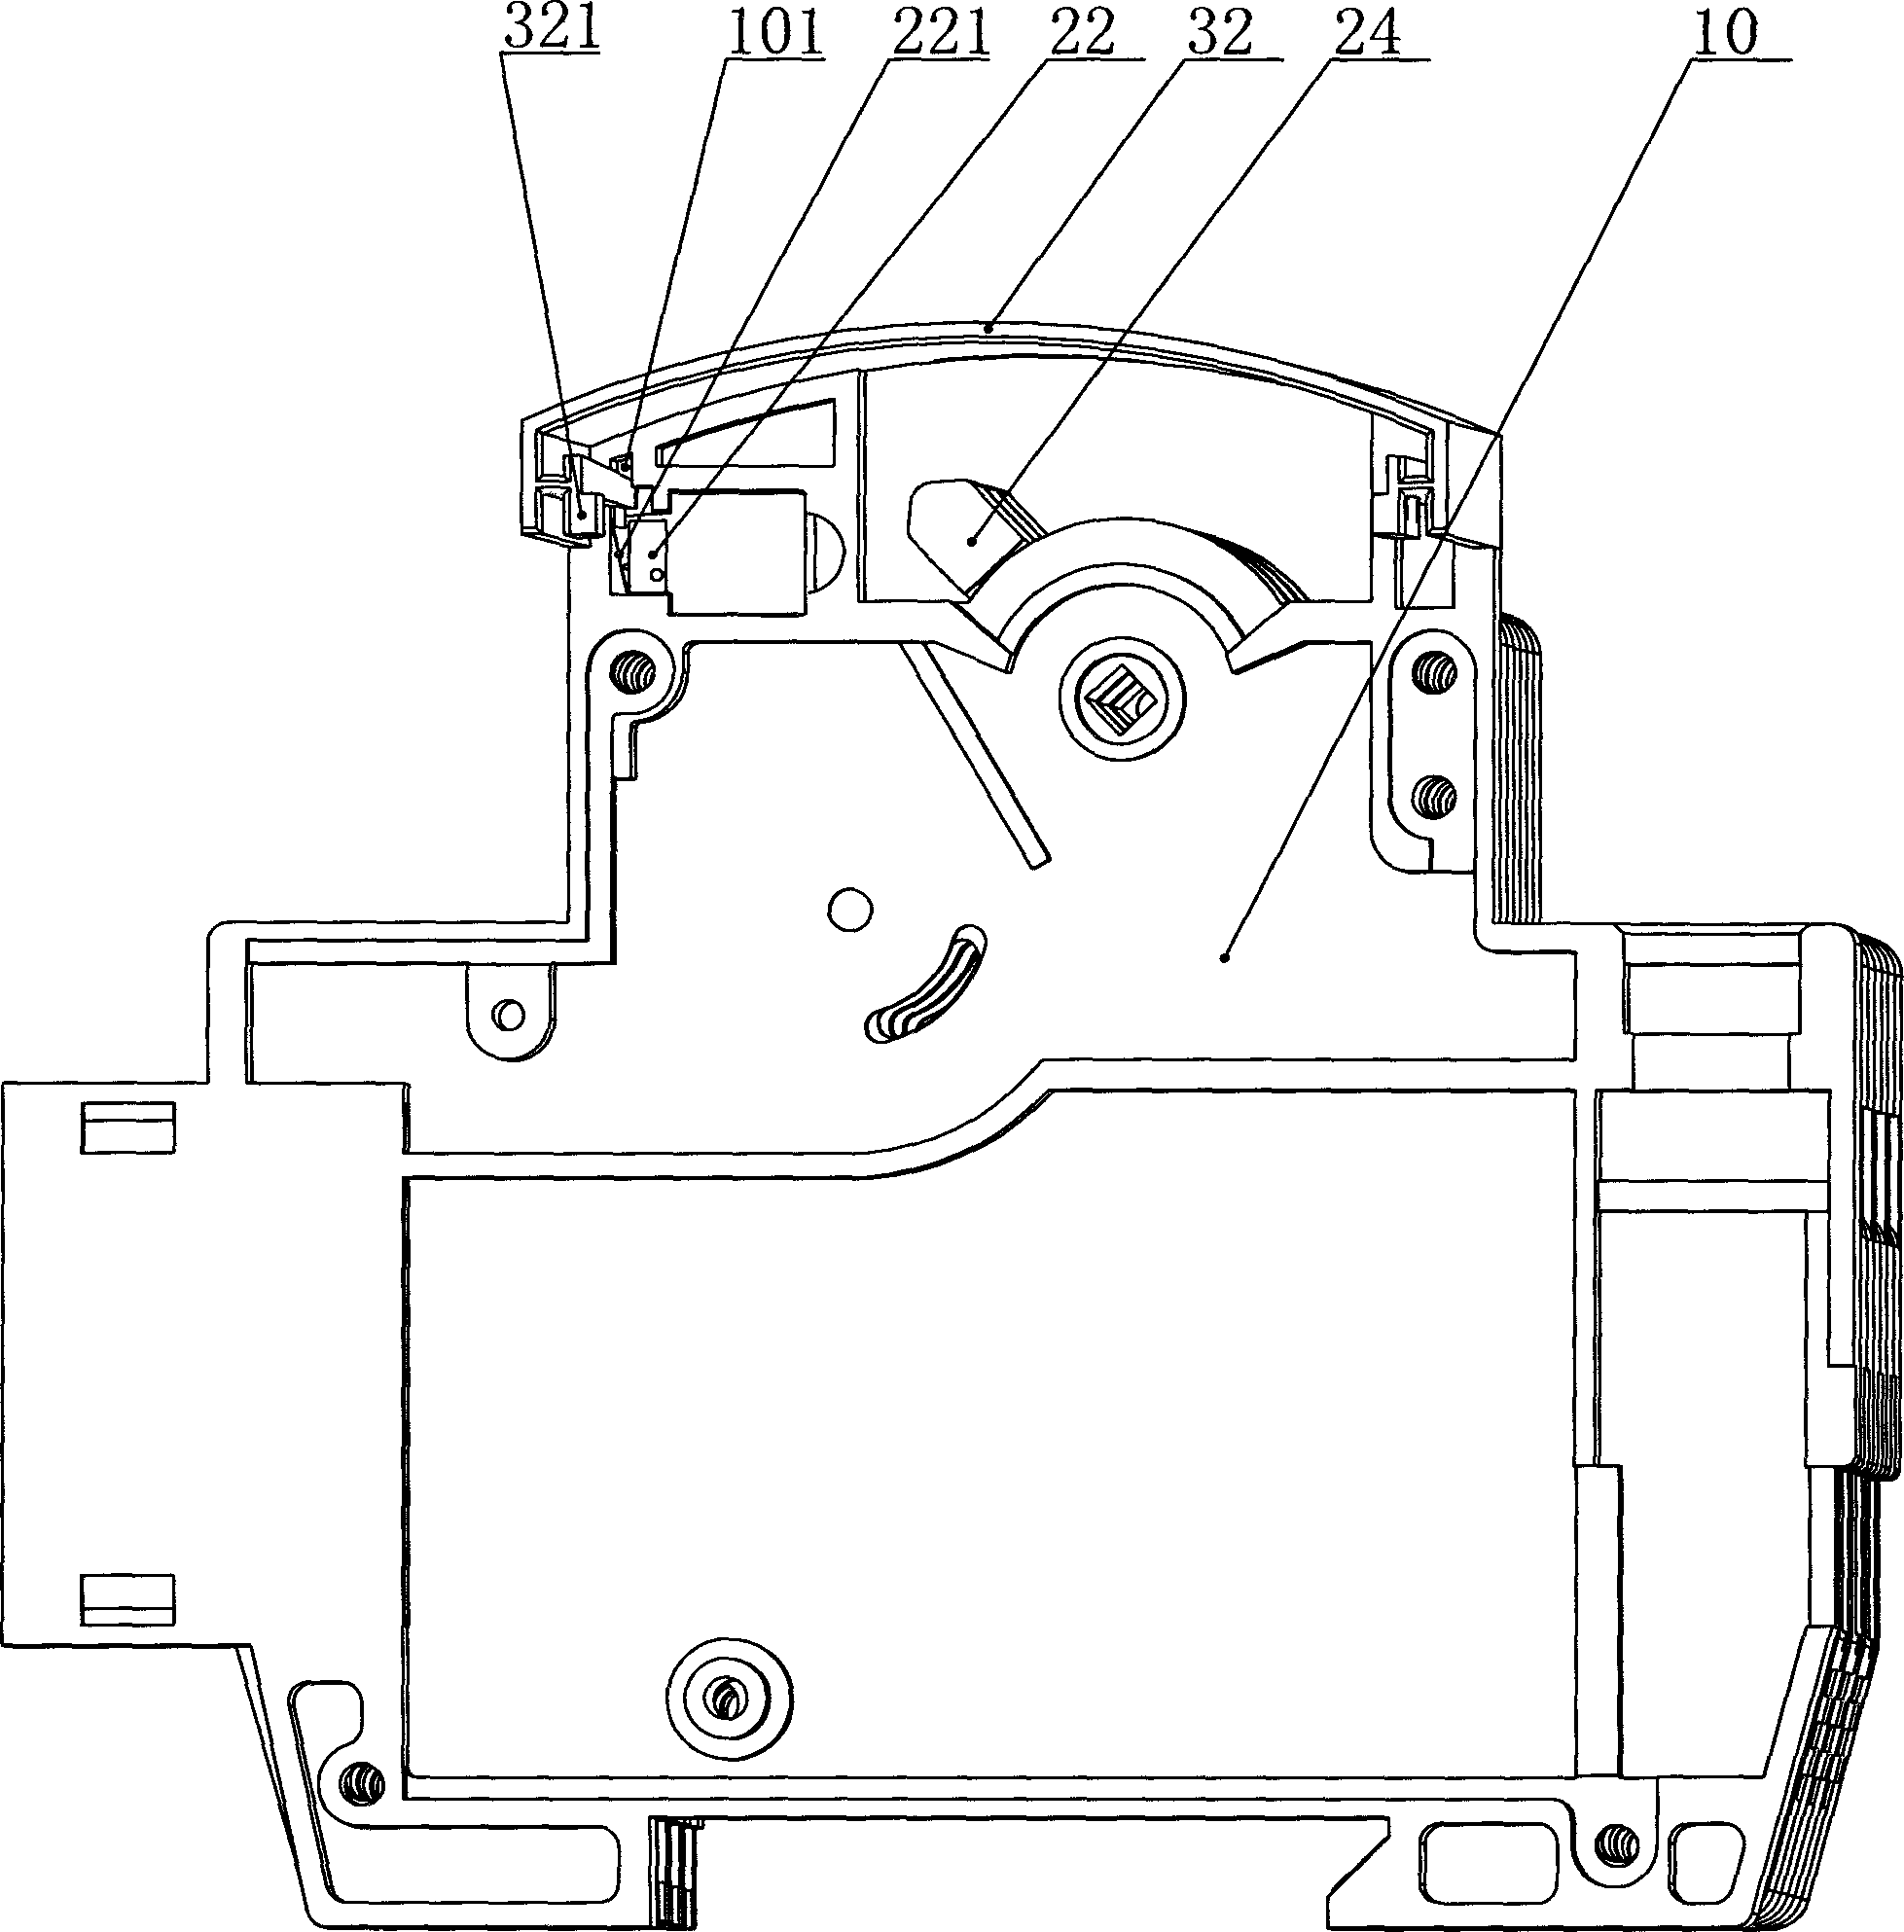 Automatic reclosing device of circuit breaker